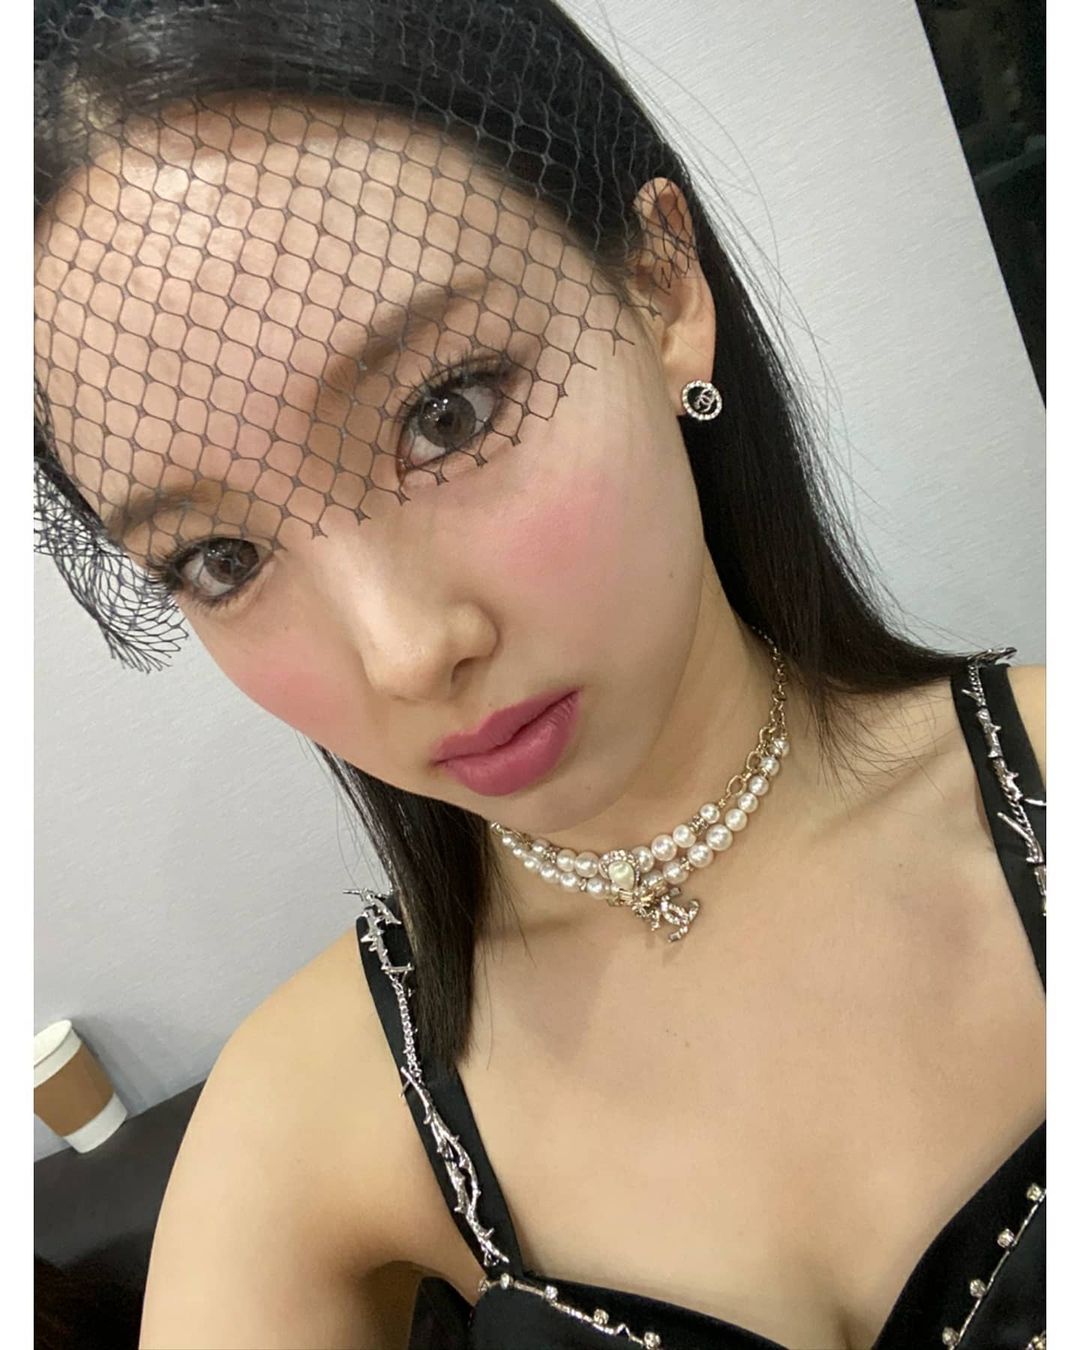 TWICE Nayeon adds sexy beauty with mesh hat + smokey